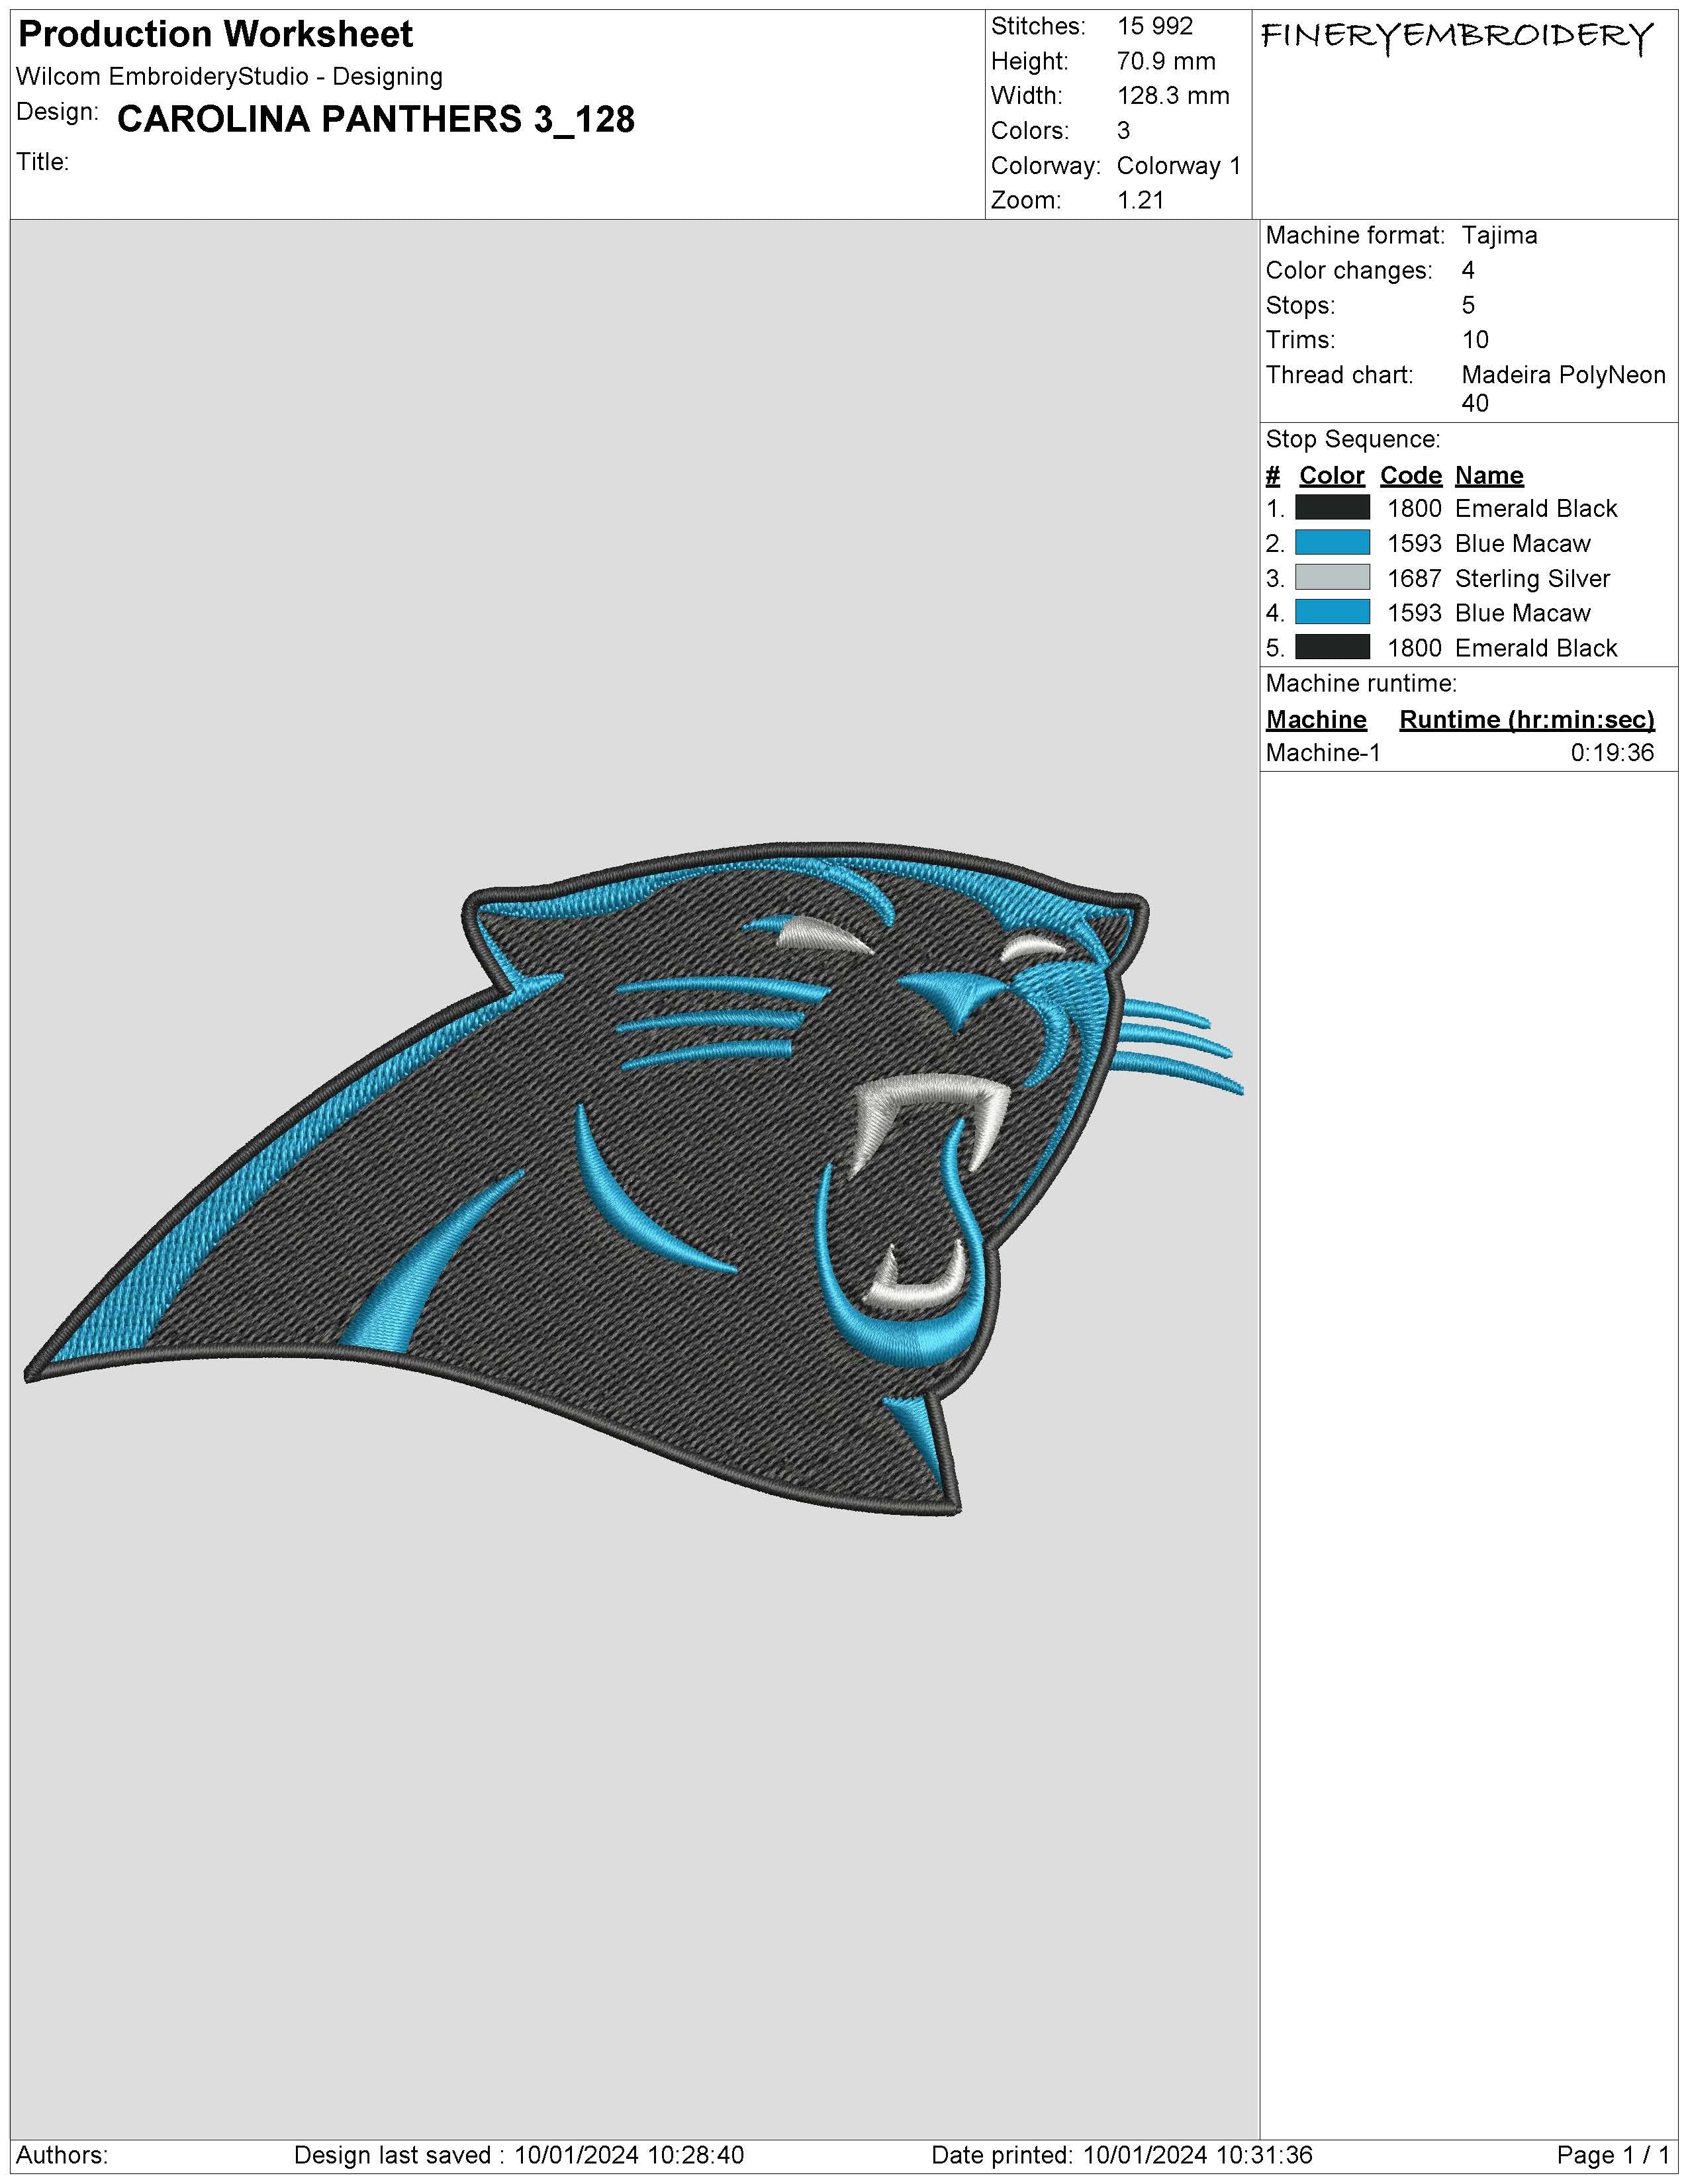 Carolina Panthers 3 : Embroidery Design